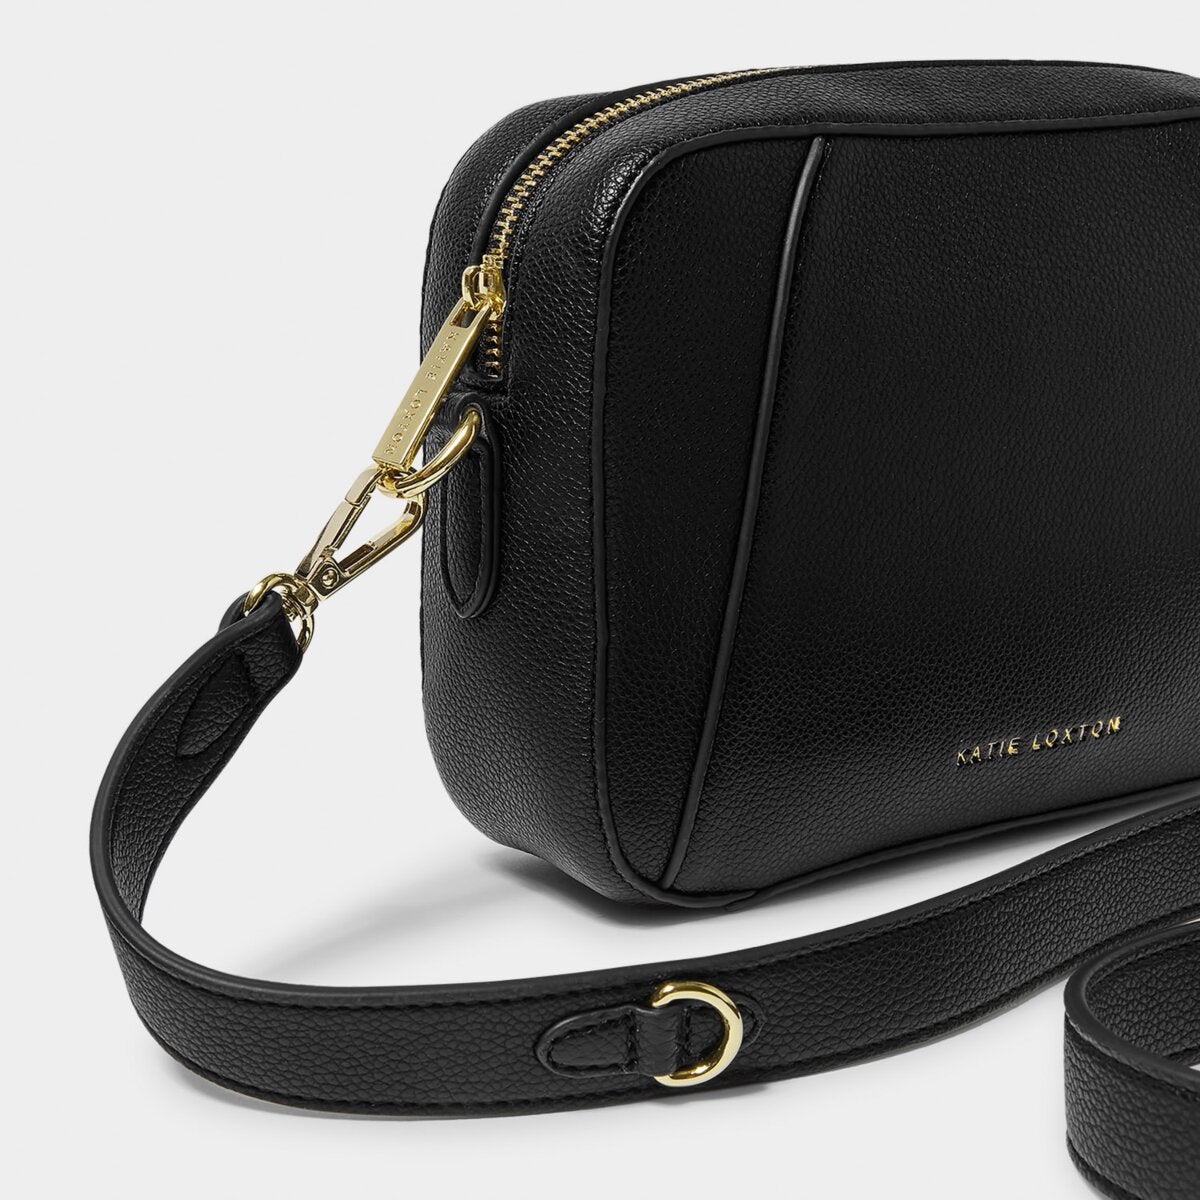 close up of black crossbody handbag focussing on gold zipper and bag hardware